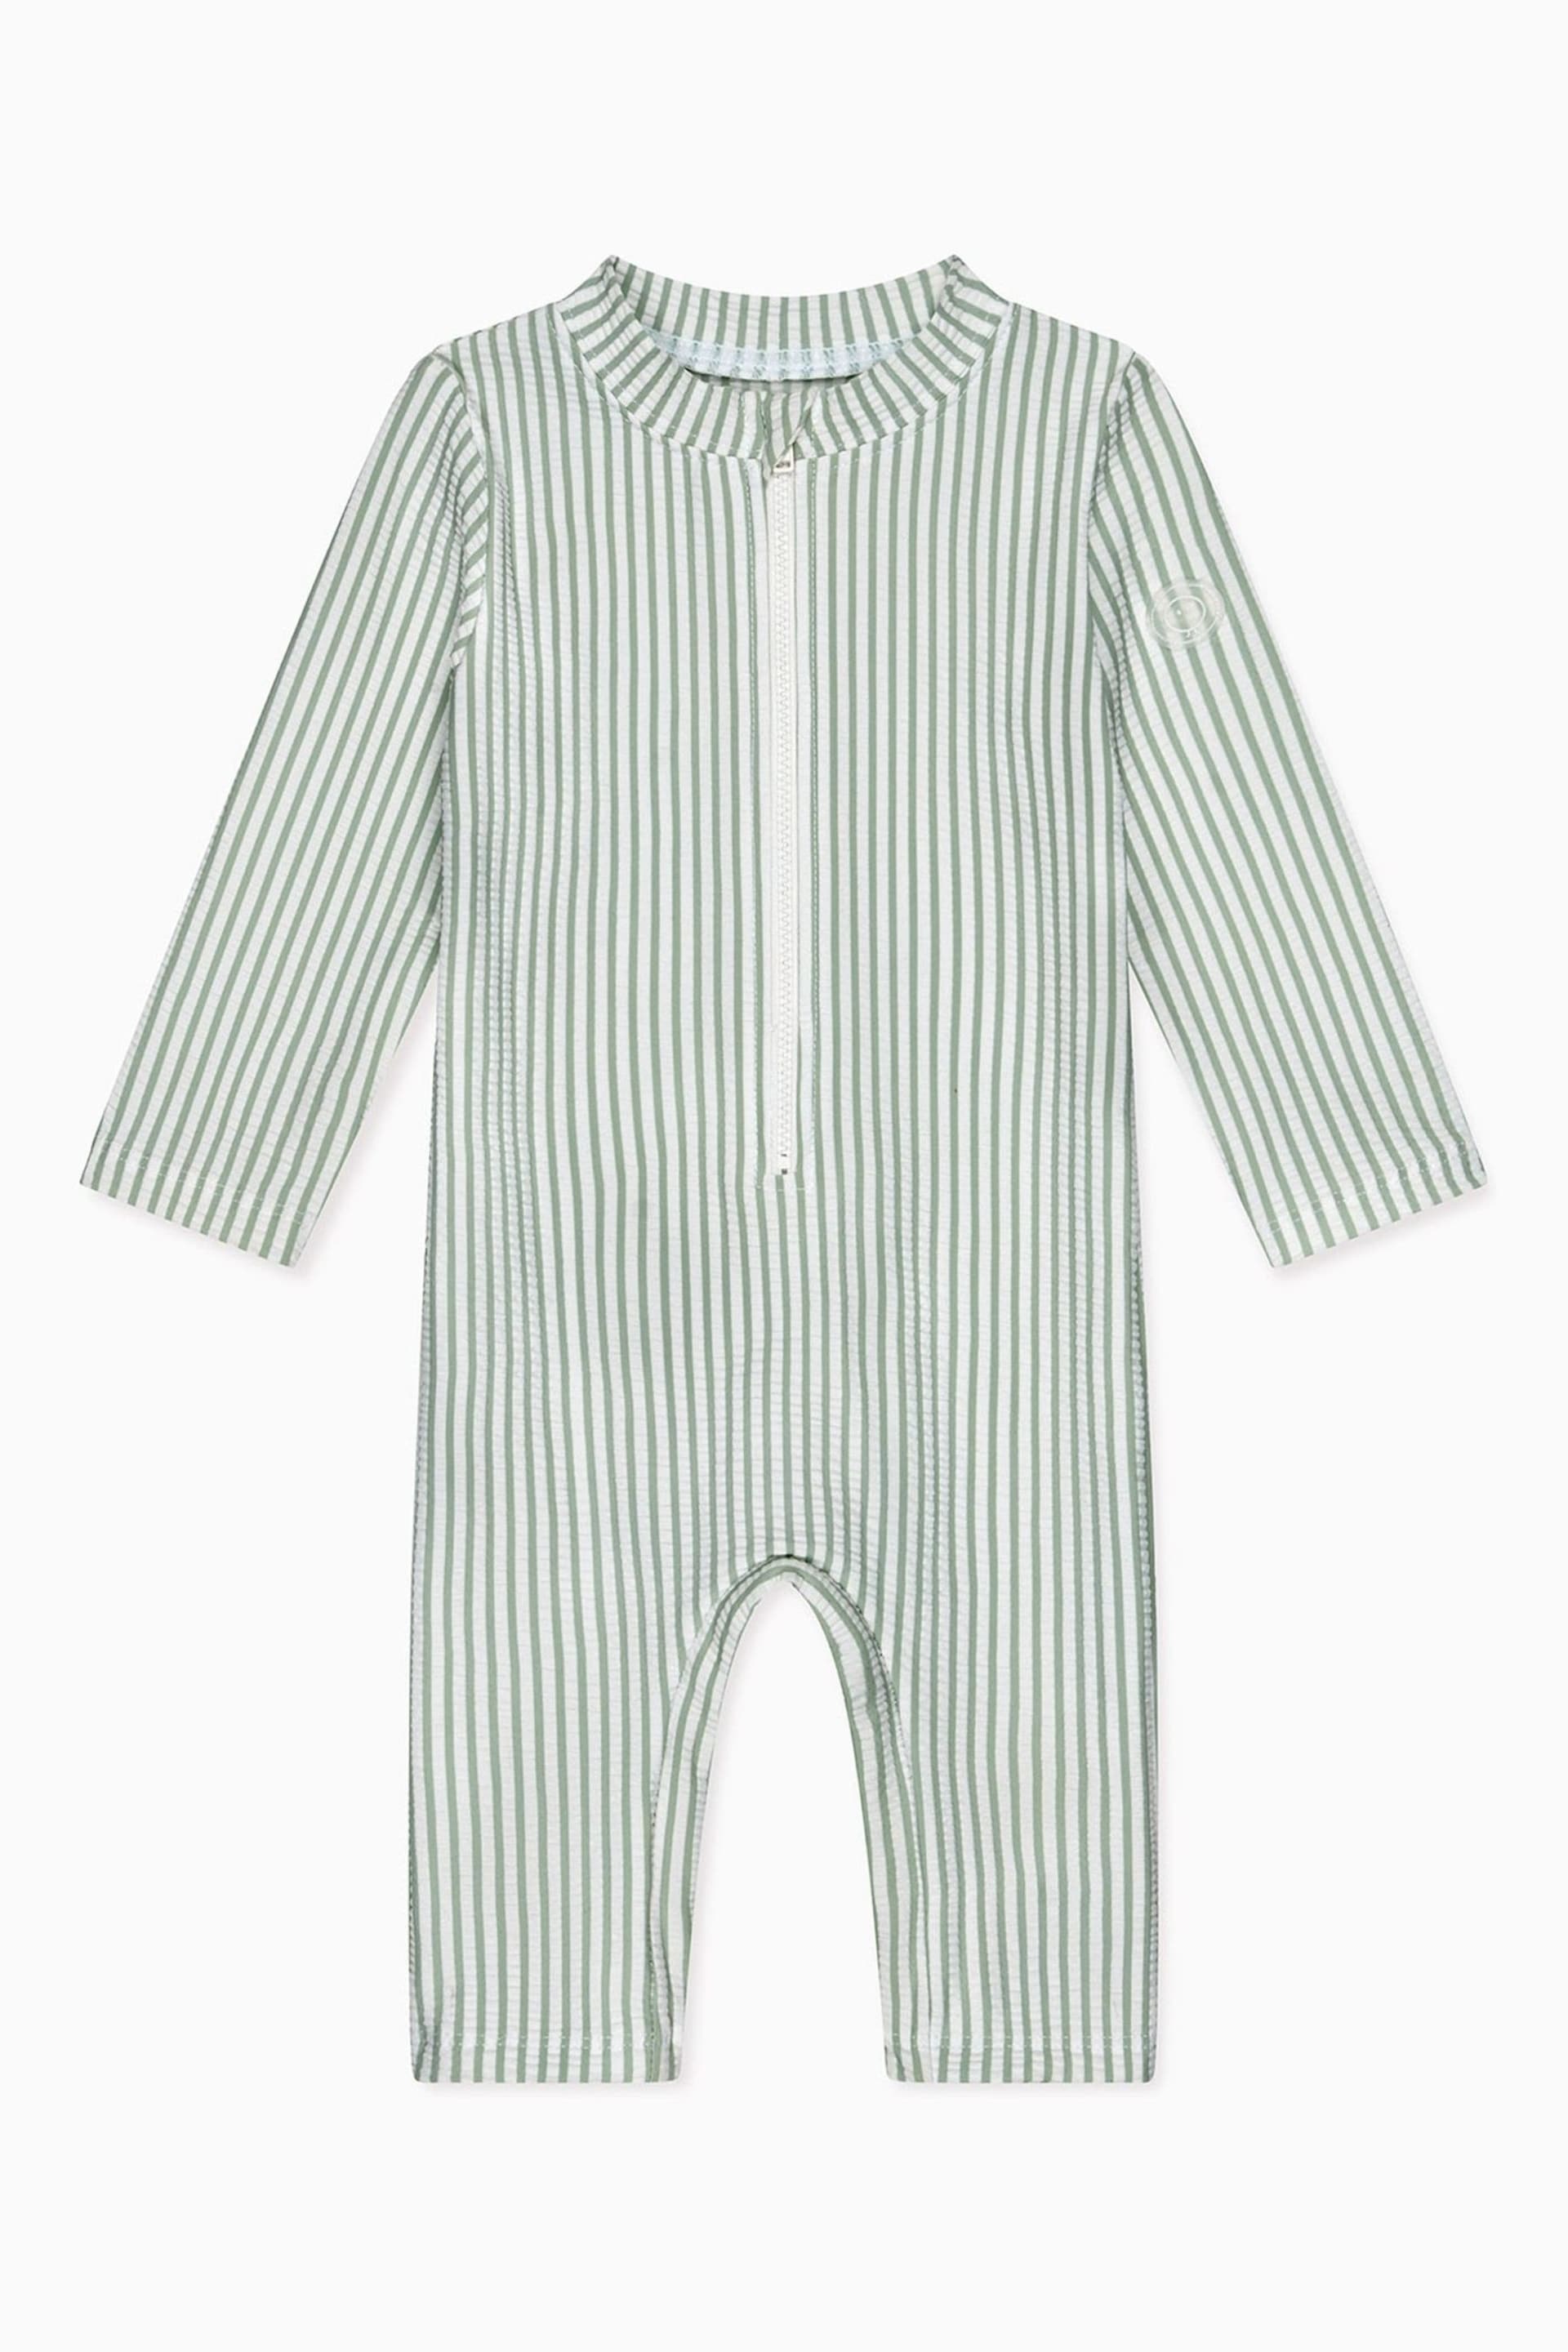 MORI Green Stripe UPF 50 Recycled Seersucker Sun Safe Suit - Image 3 of 3